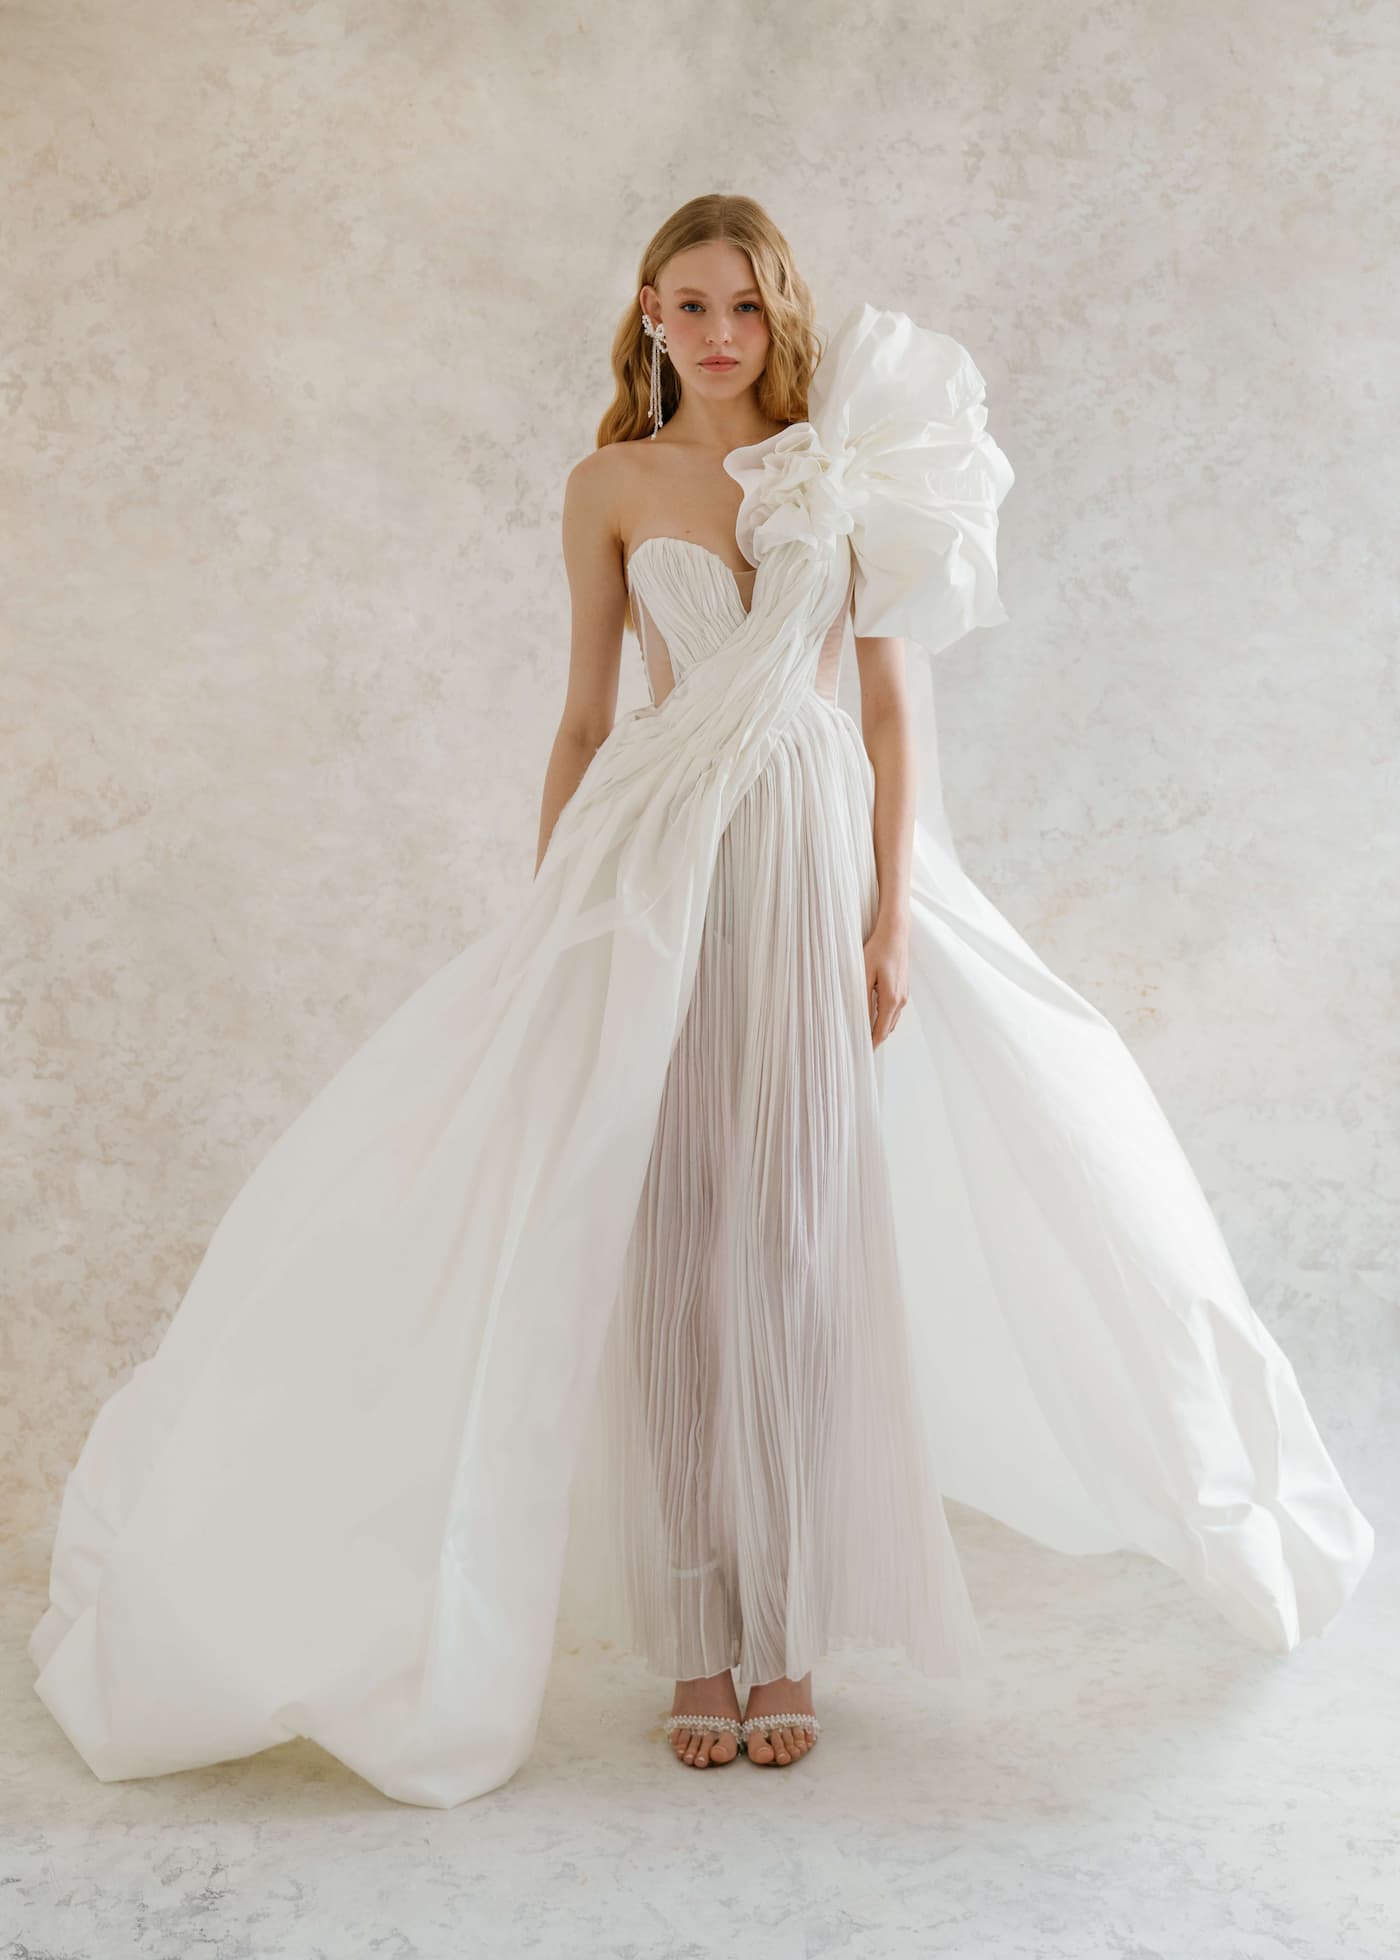 Luxury Fairytale Long Sleeve Beaded Wedding Dress Sparkly Lace Princess  Ball Gown Wedding Dress Glam Illusion Neck Beaded Wedding Dress - Etsy